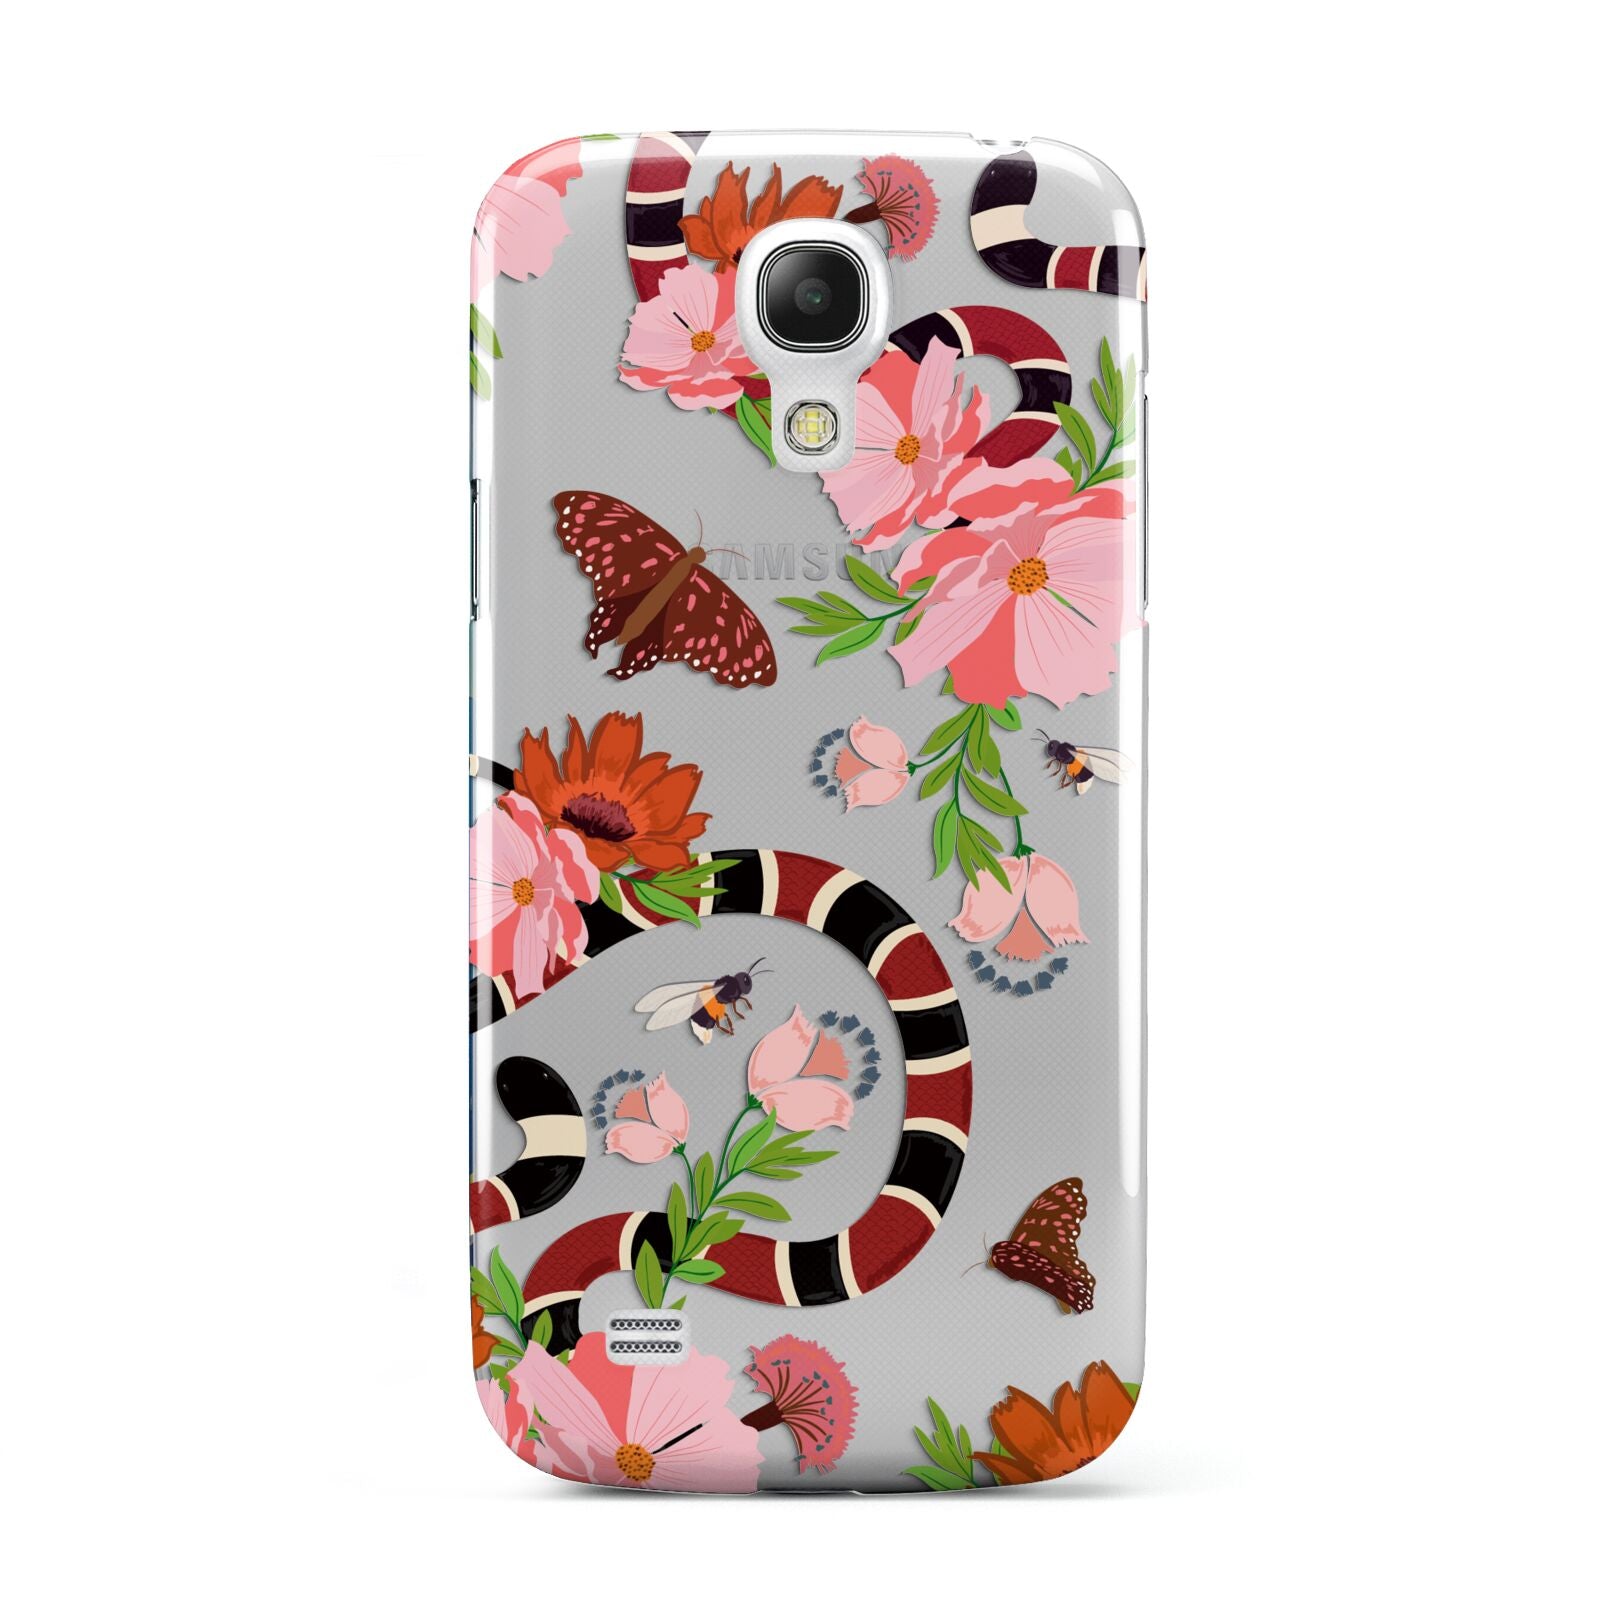 Floral Snake Samsung Galaxy S4 Mini Case